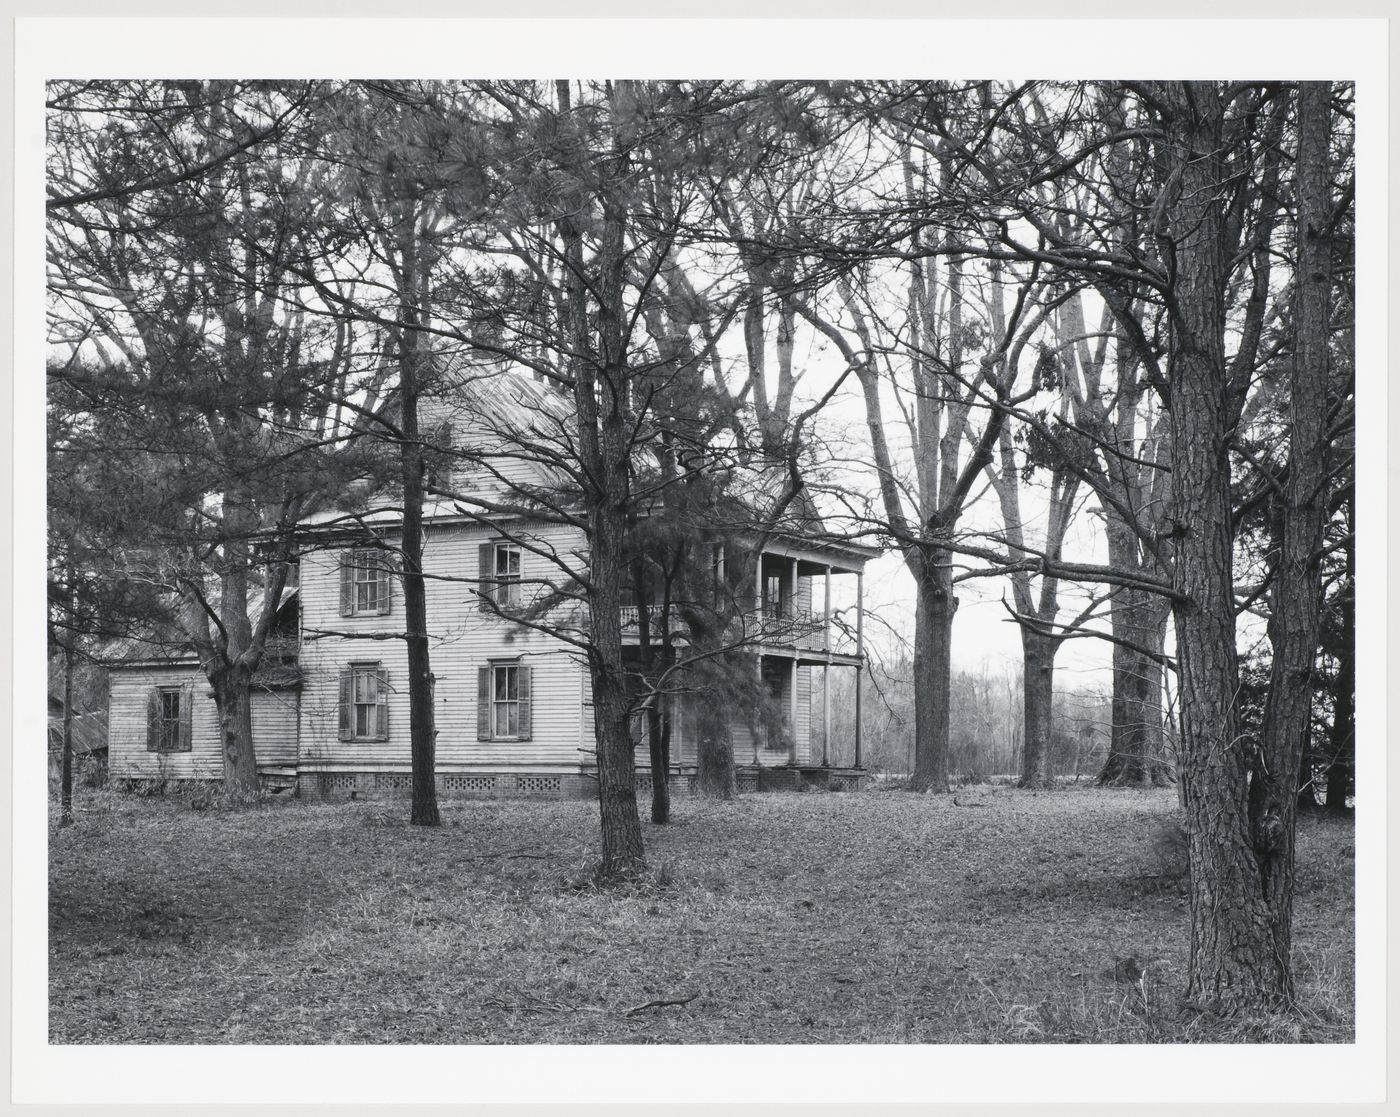 House, ca. 1880, Hertford, Perquimans County, North Carolina